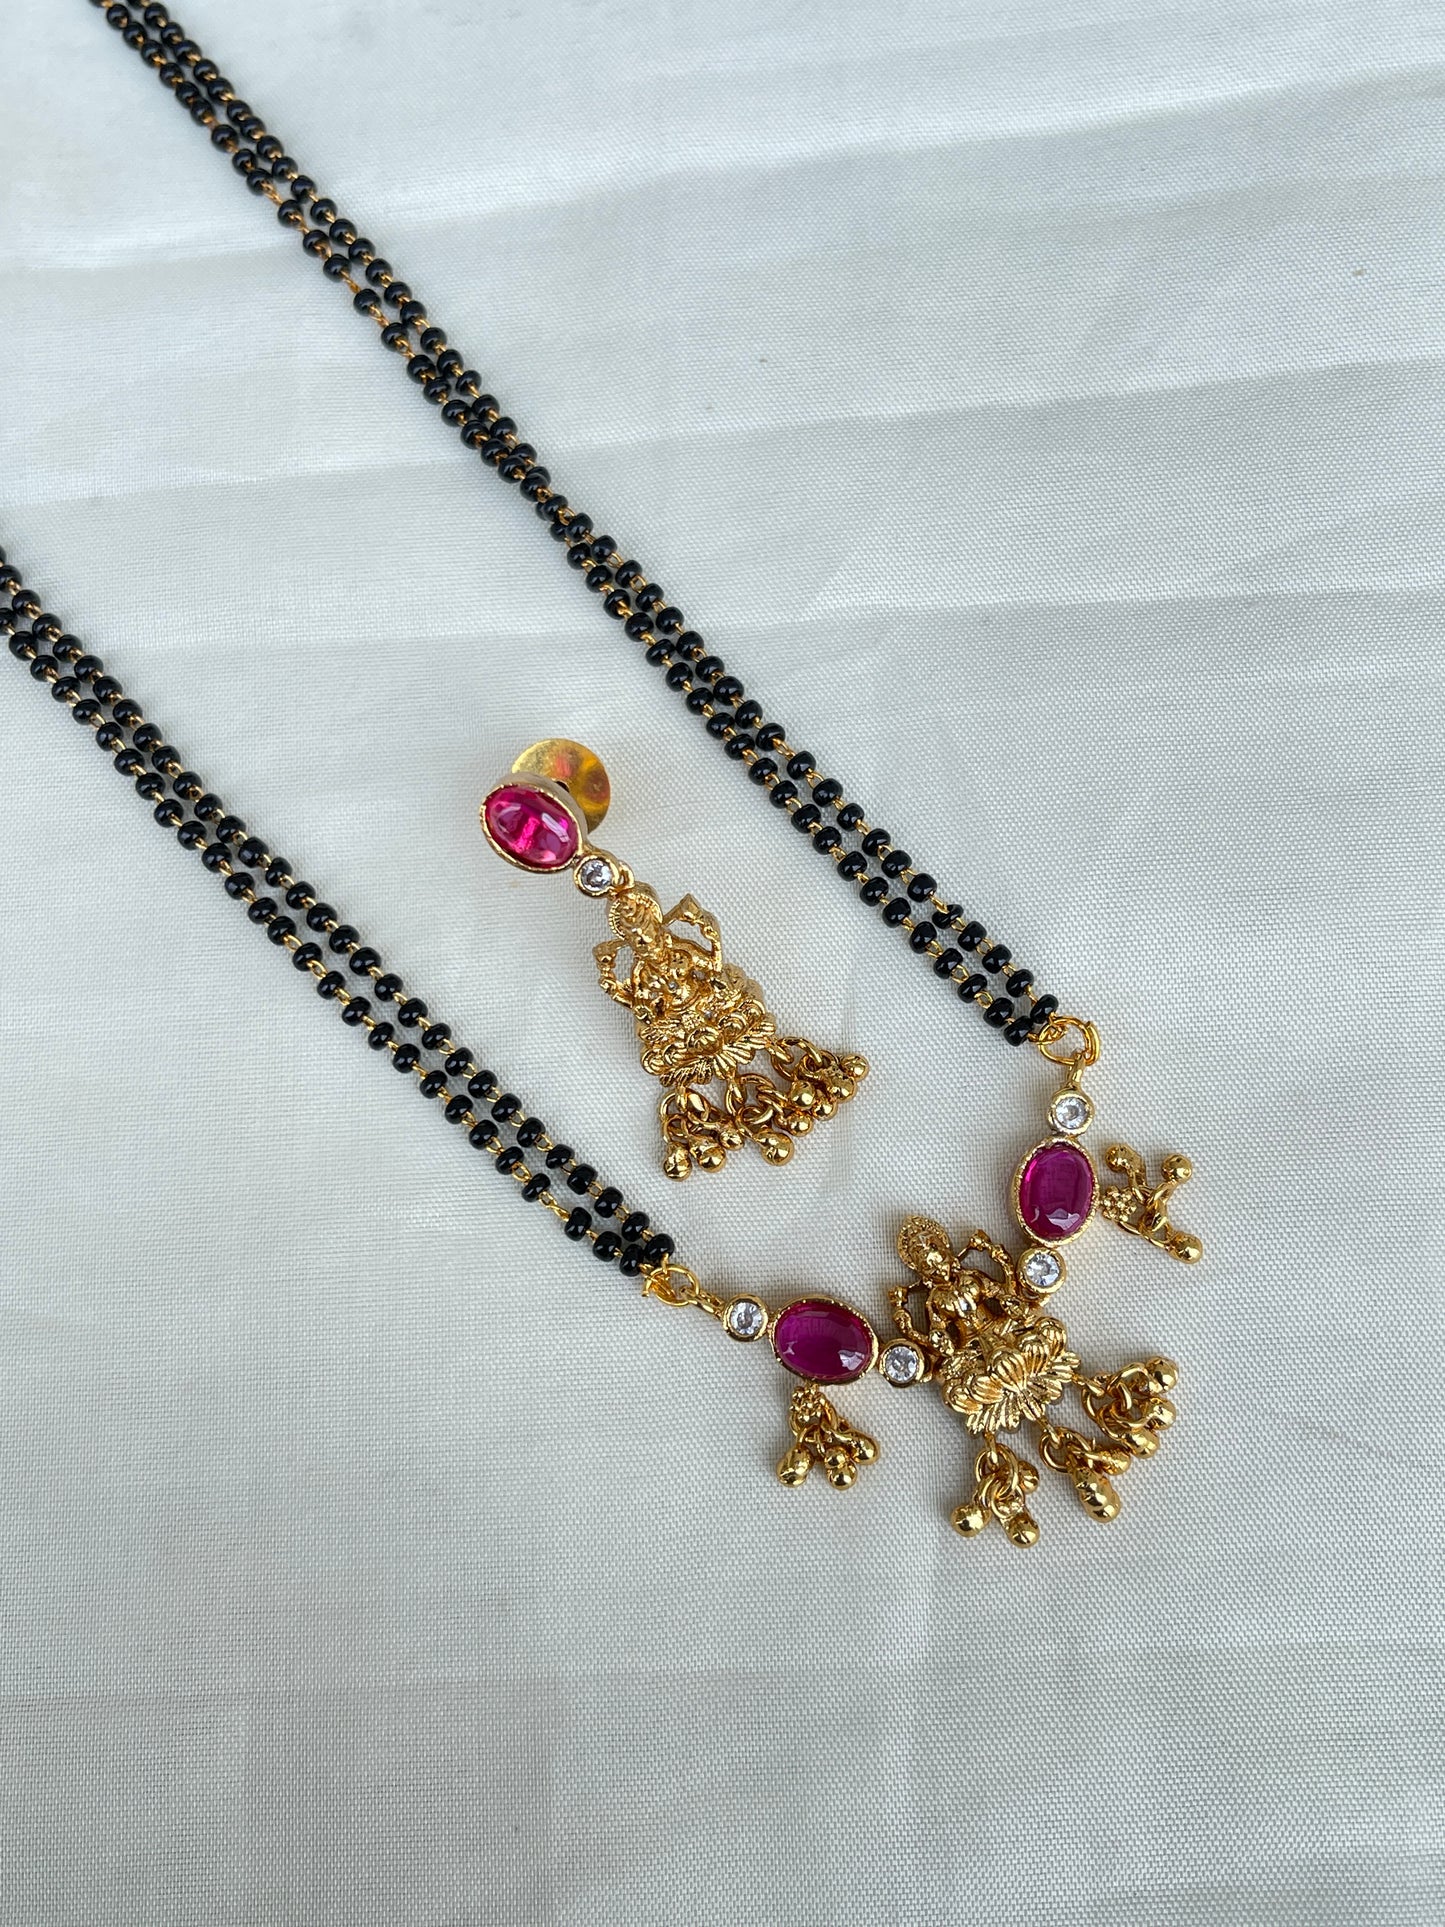 2 lines short blackbeads with lakshmi devi pendant and earrings